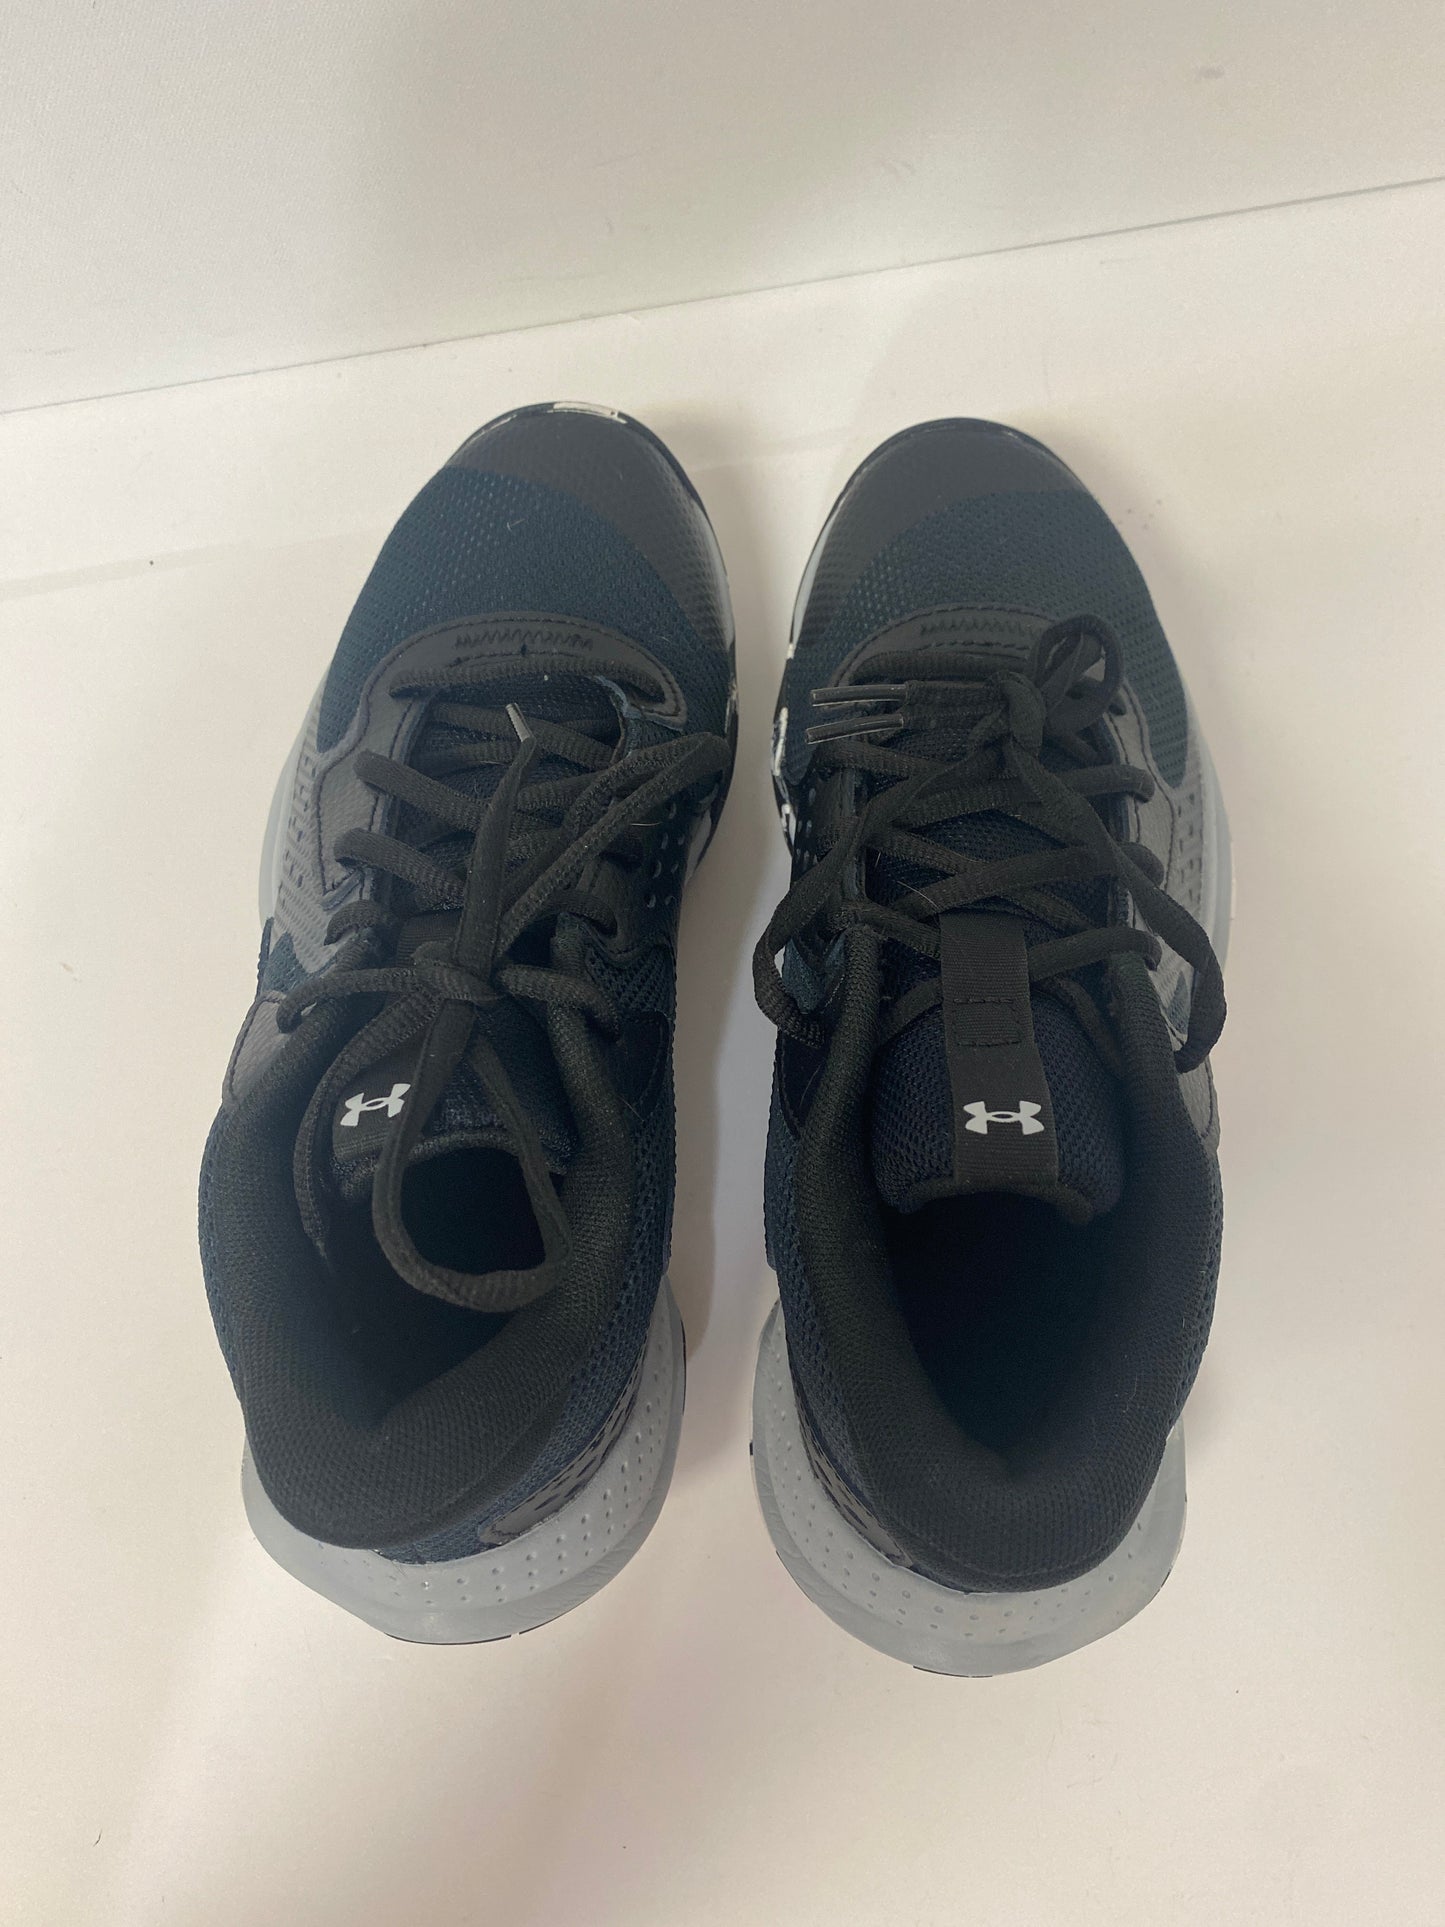 Black Shoes Athletic Under Armour, Size 9